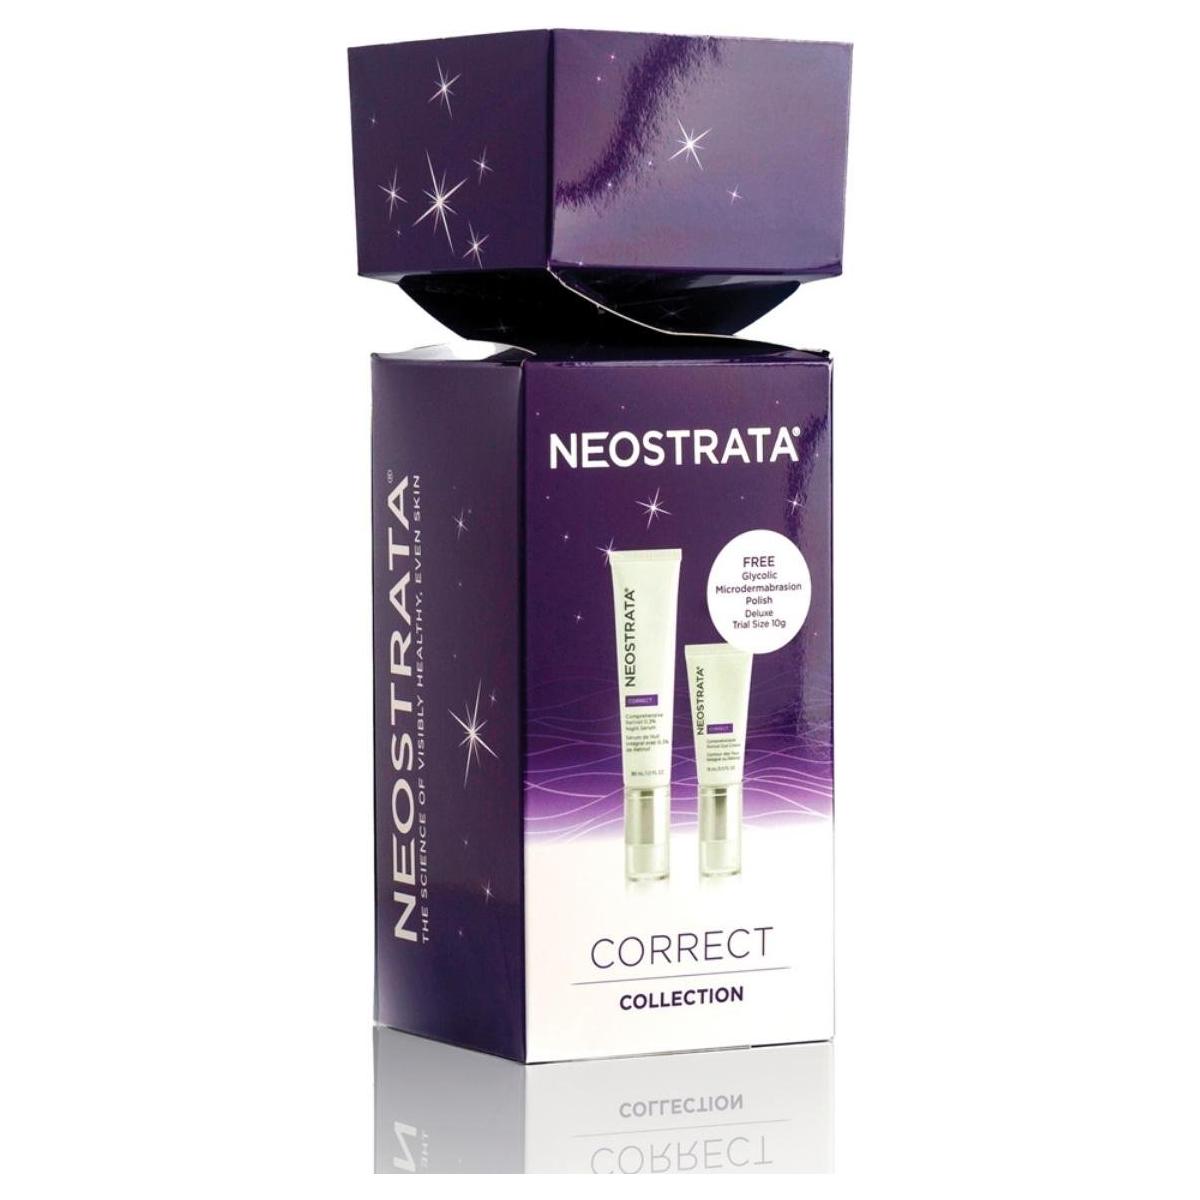 Neostrata | Correct Gift Set - DG International Ventures Limited